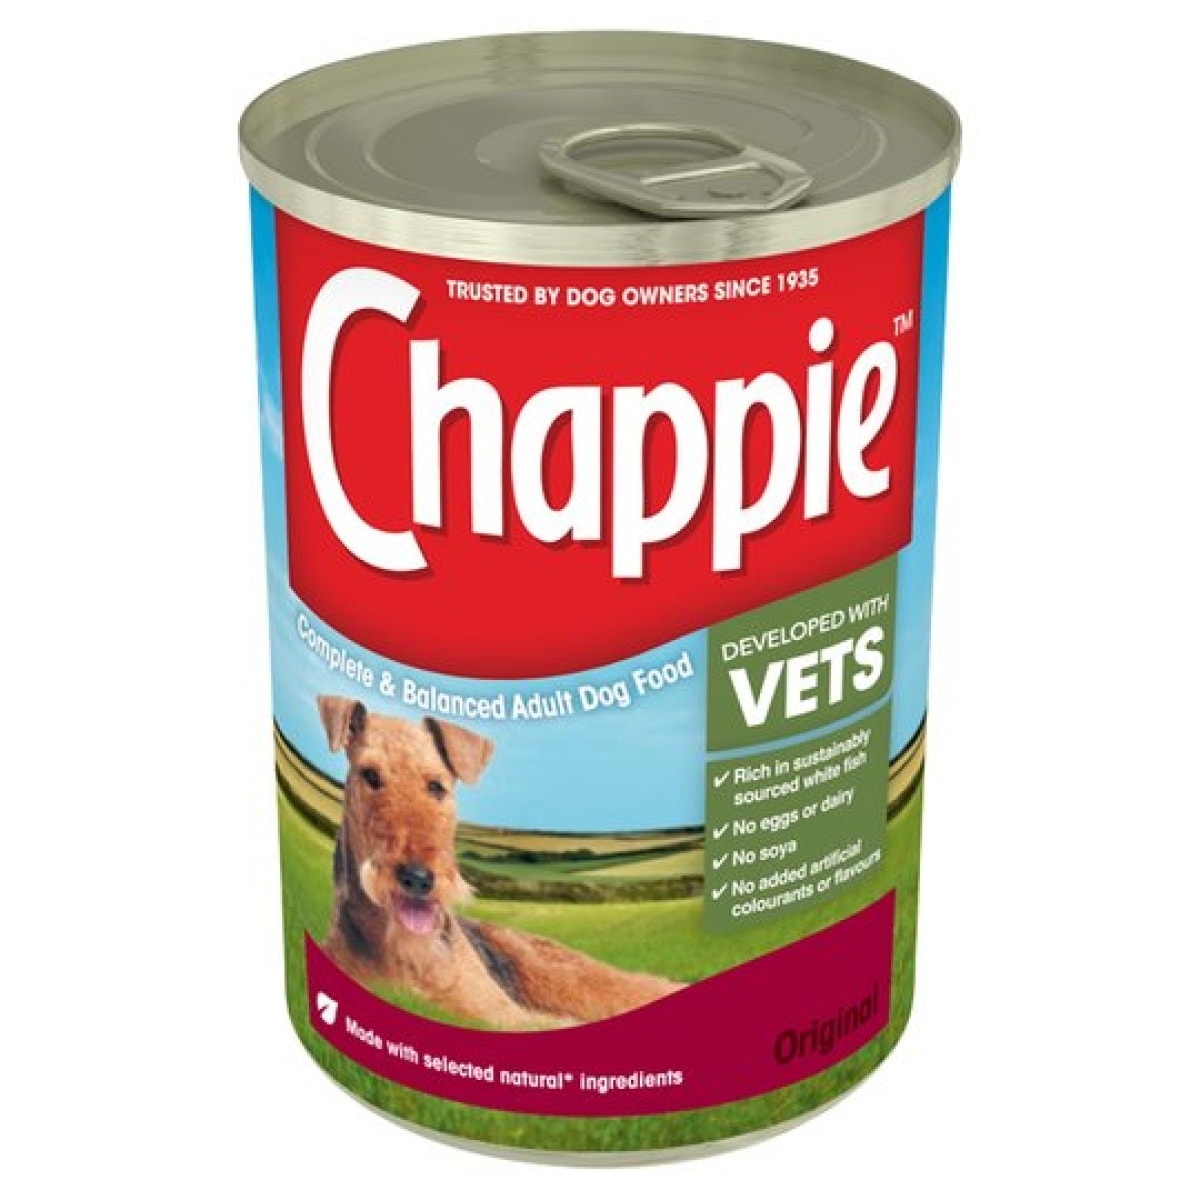 Chappie Tin 412g Main Image